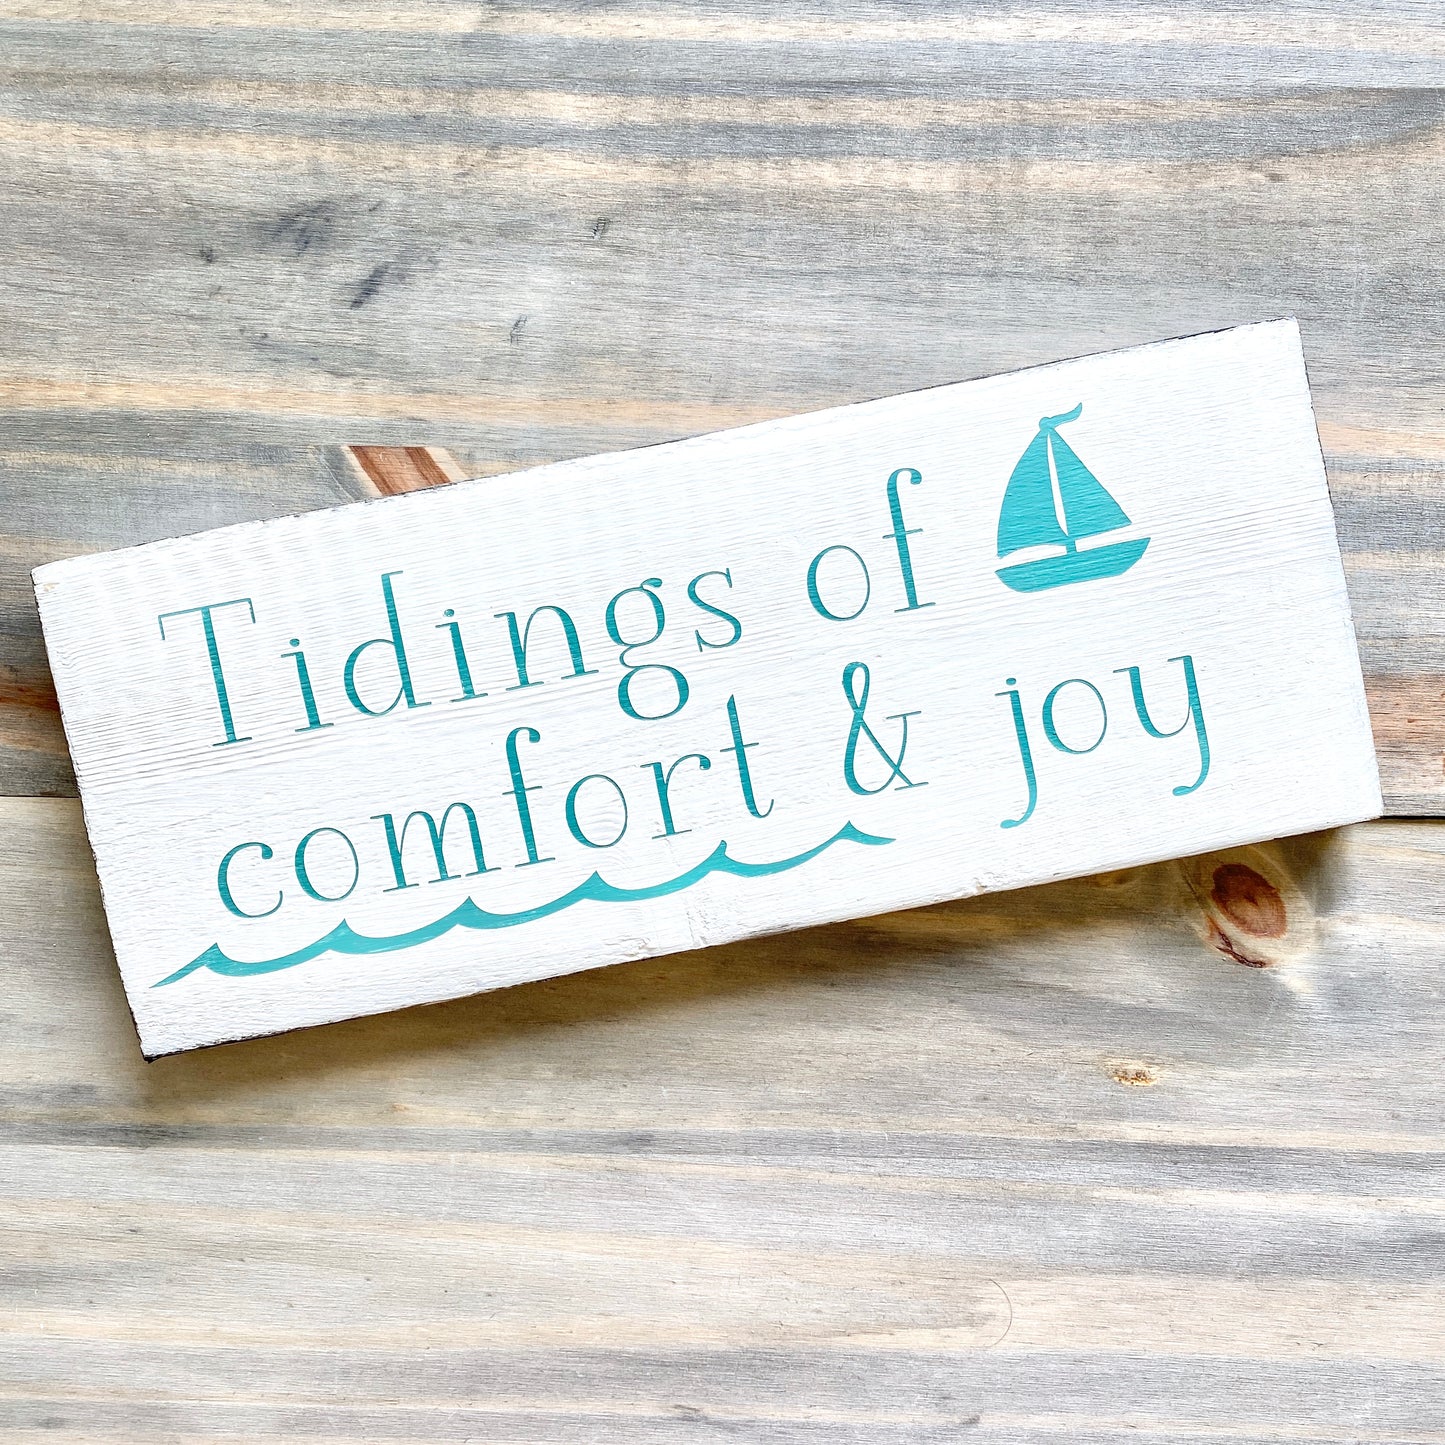 Tidings of comfort & joy sign